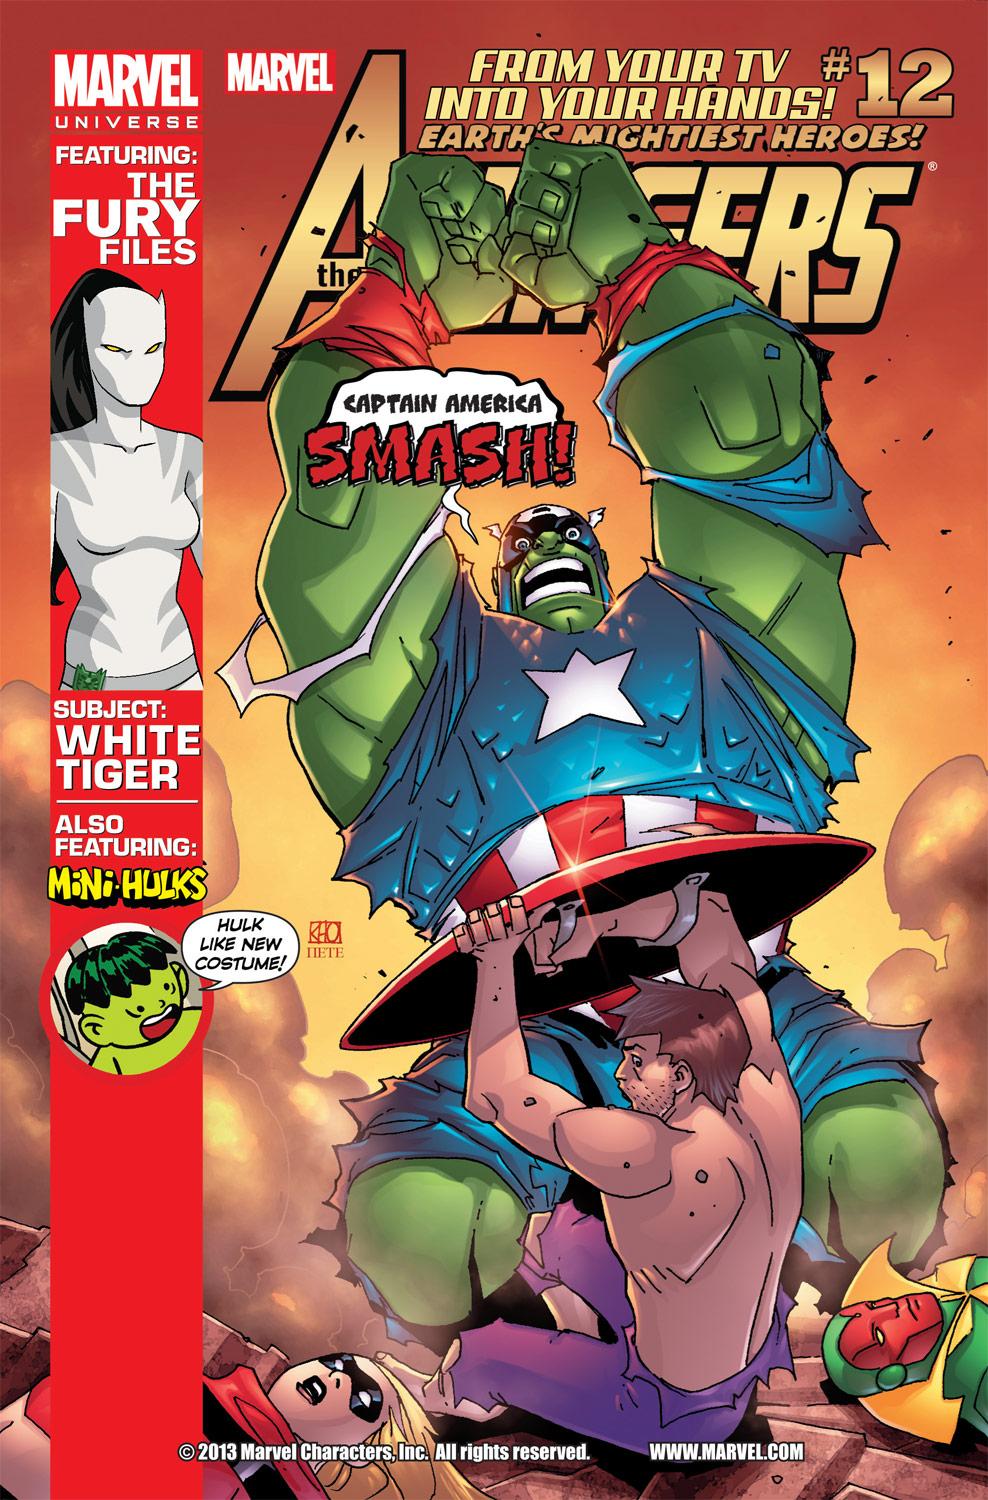 Marvel Universe Avengers: Earth's Mightiest Heroes (2012) #12